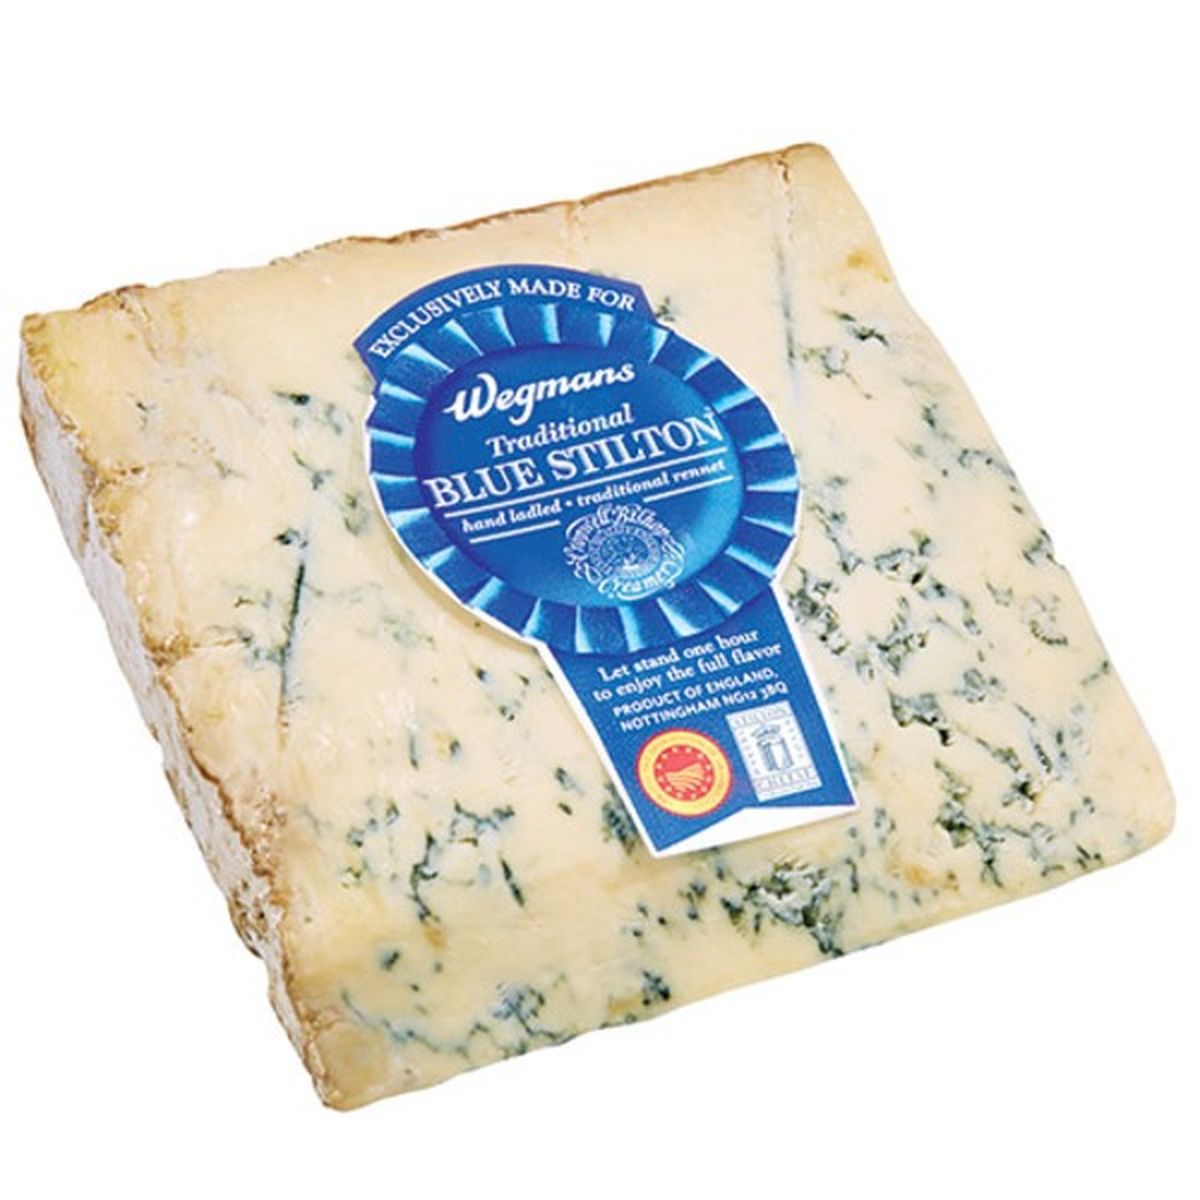 Calories in Wegmans Traditional Blue Stilton Cheese